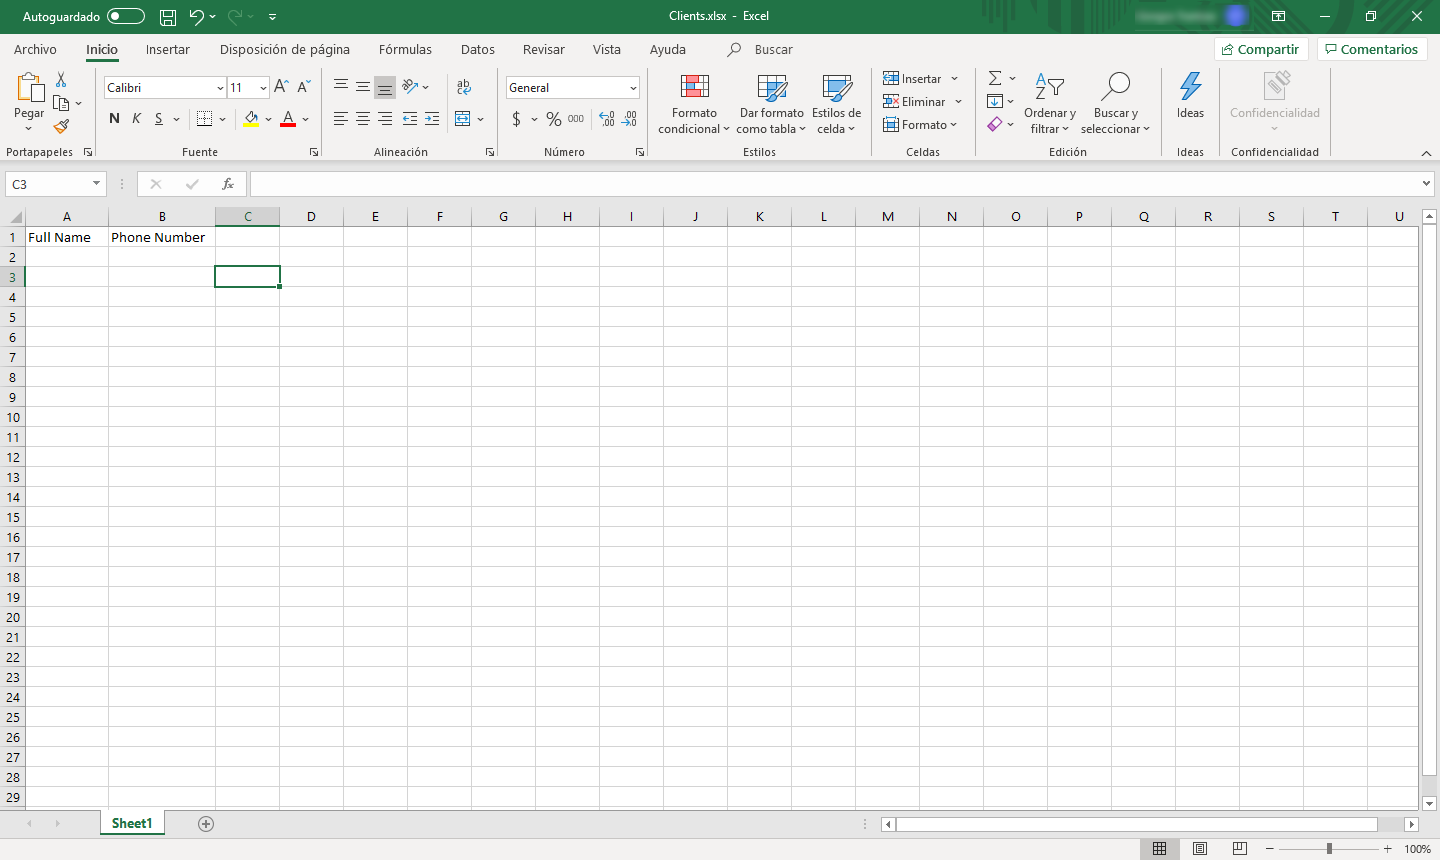 Captura de pantalla de la estructura del archivo de Excel.